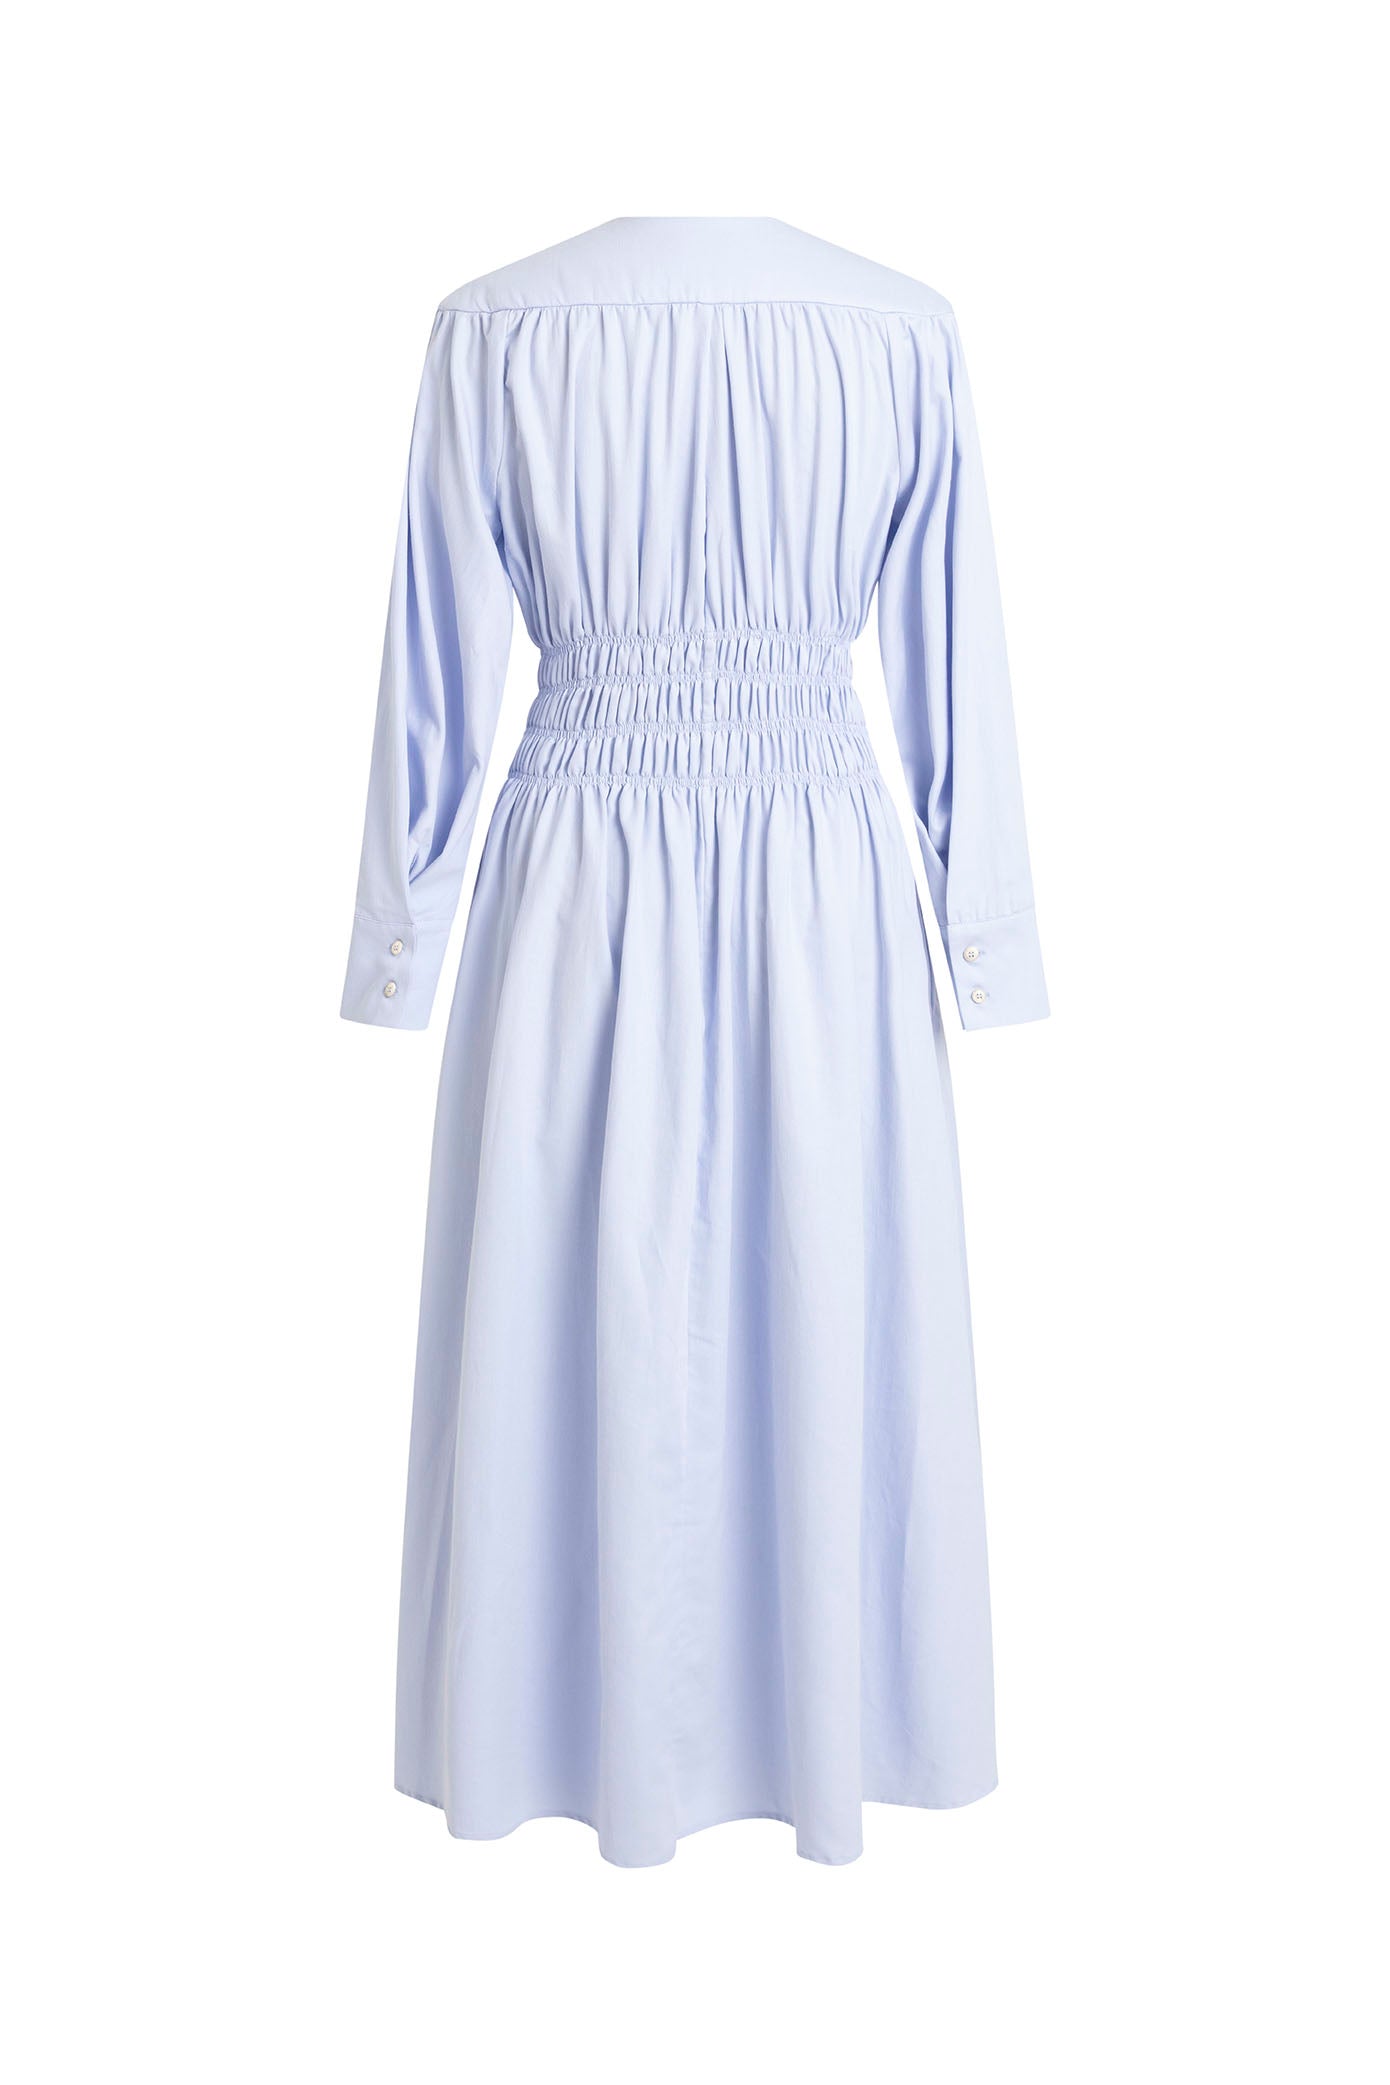 Diana Cotton Dress - Baby Blue